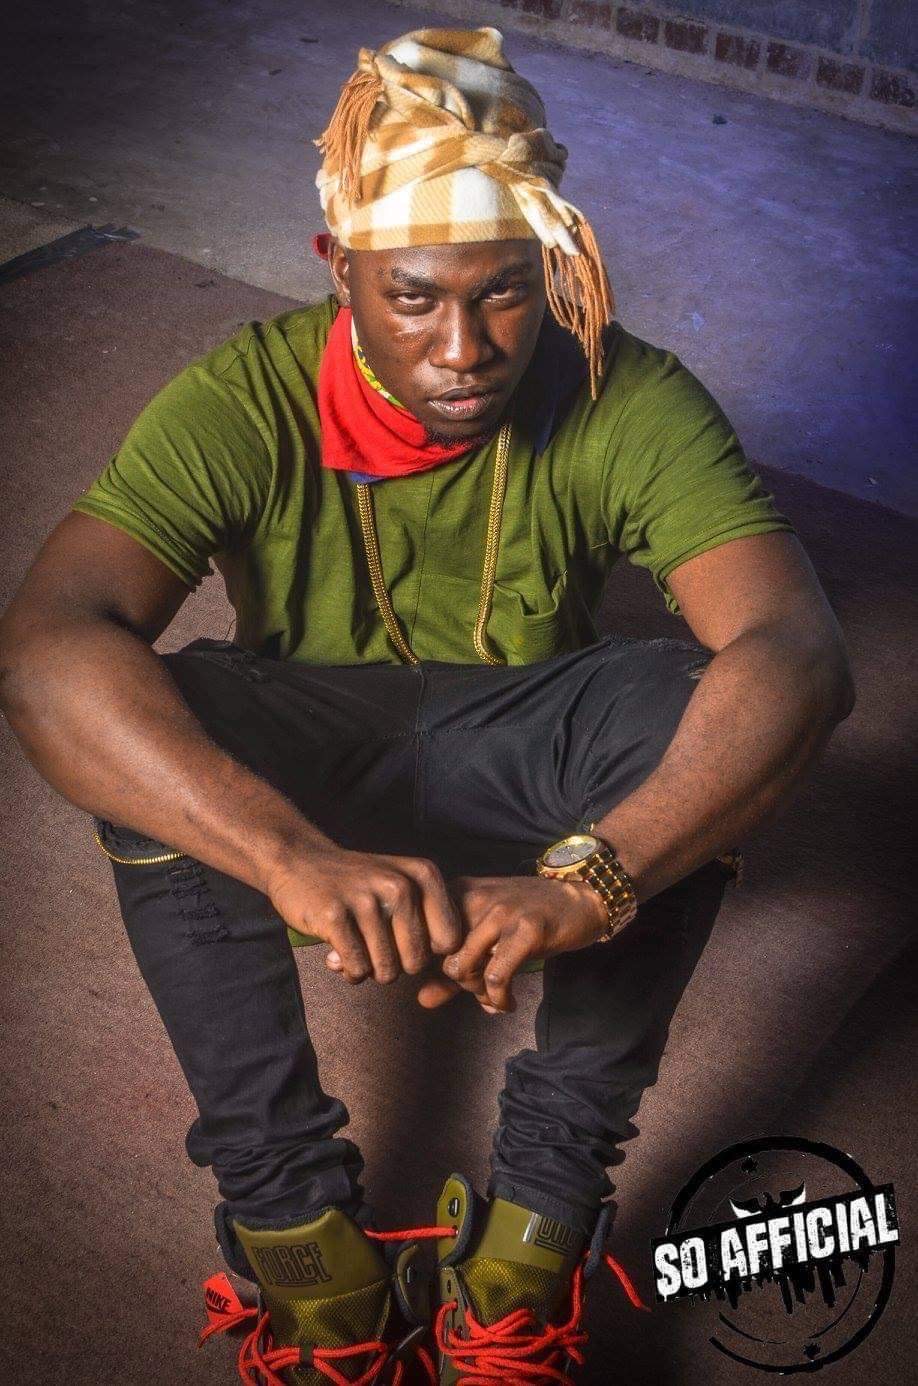 Lil Brudda Haitian drops his latest single “Big Ole Mood”